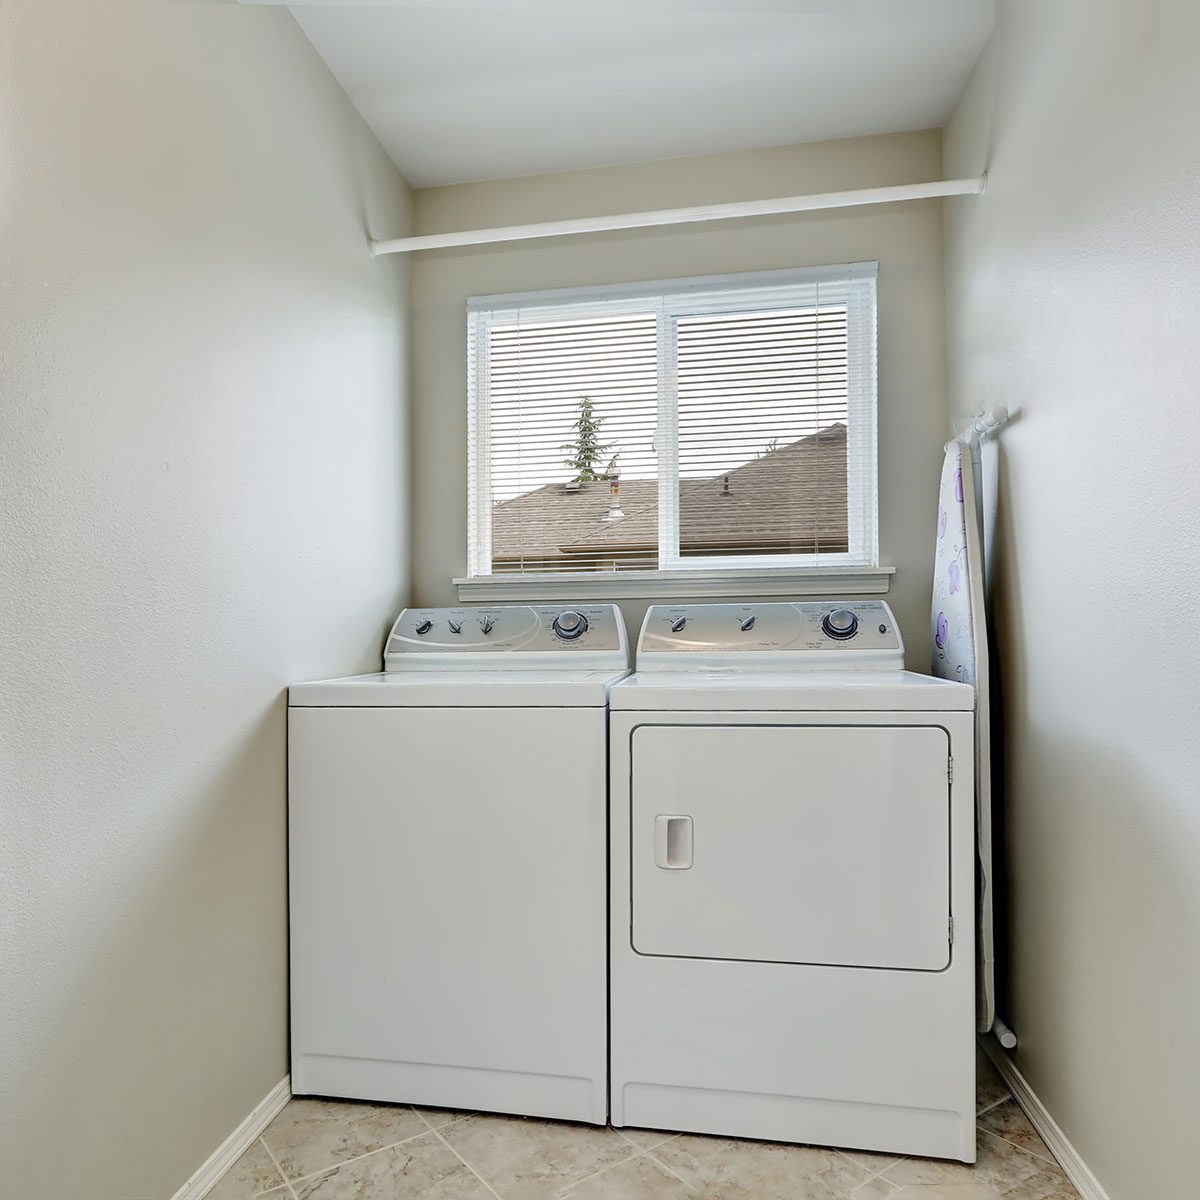 Ingenious storage ideas for tiny laundry rooms